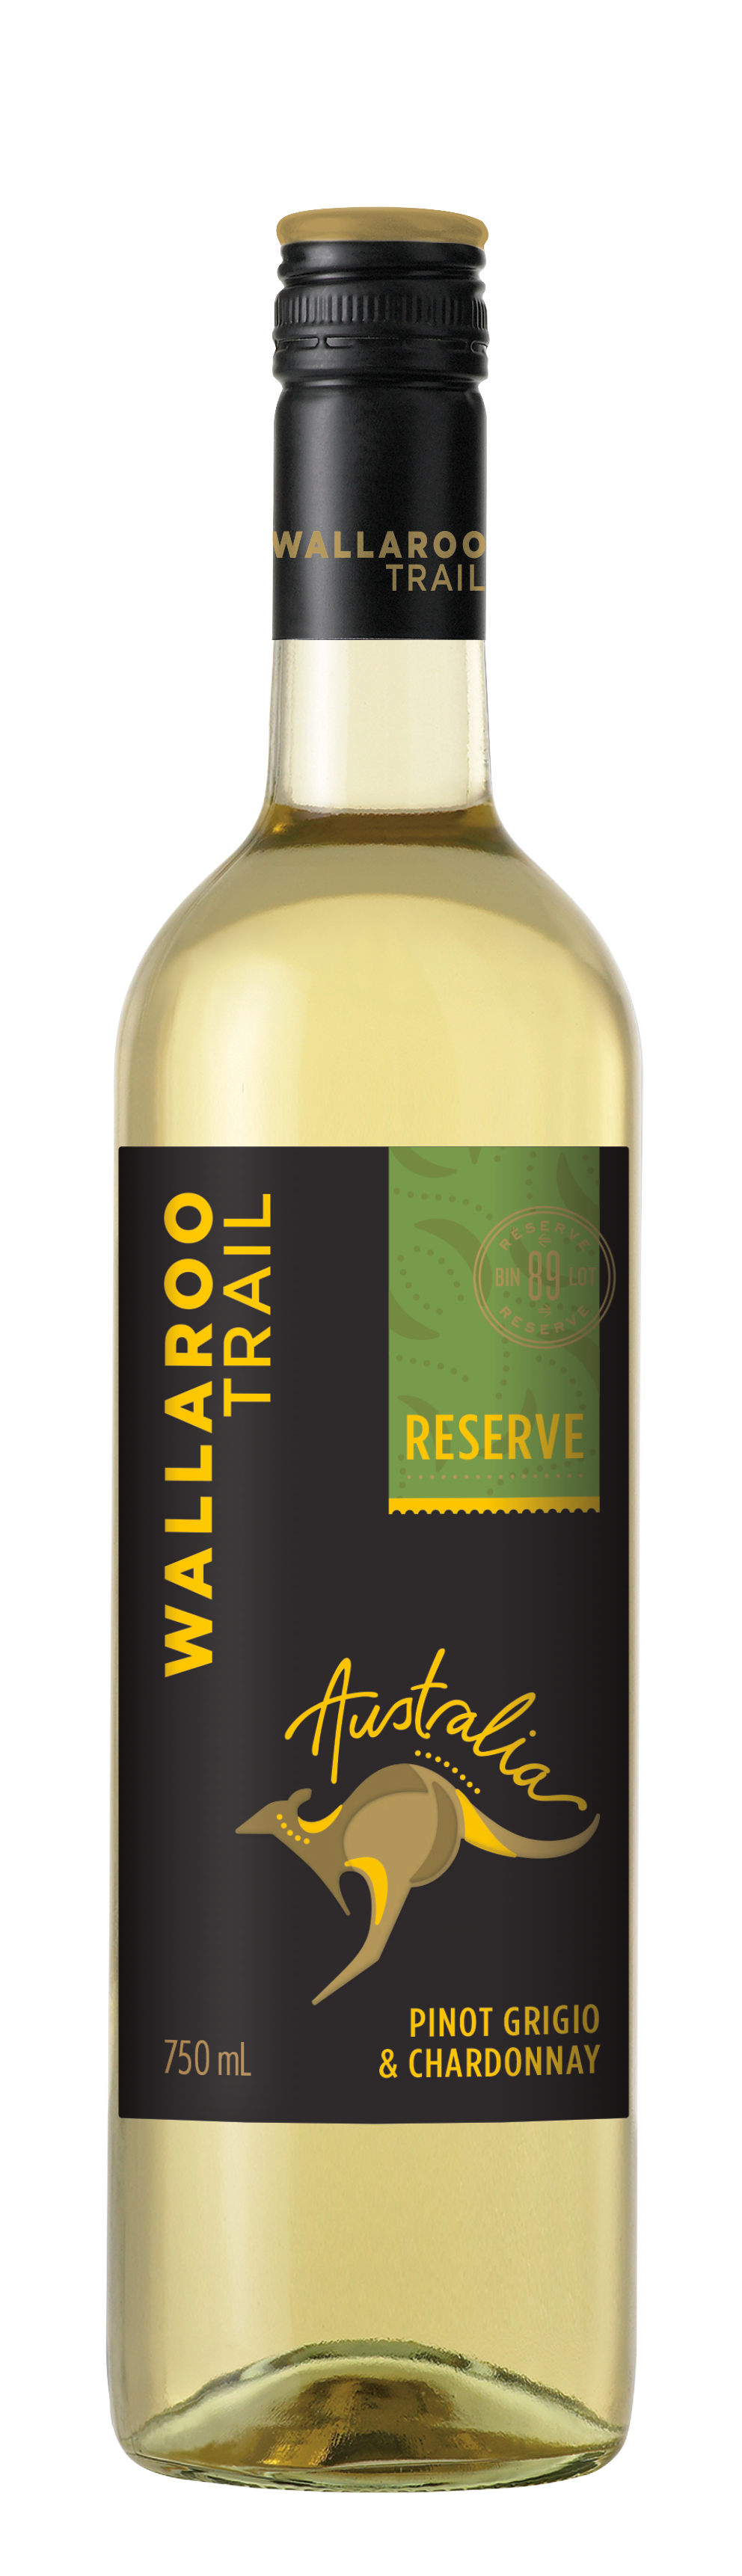 Wallaroo Trail Reserve Pinot grigio Chardonnay